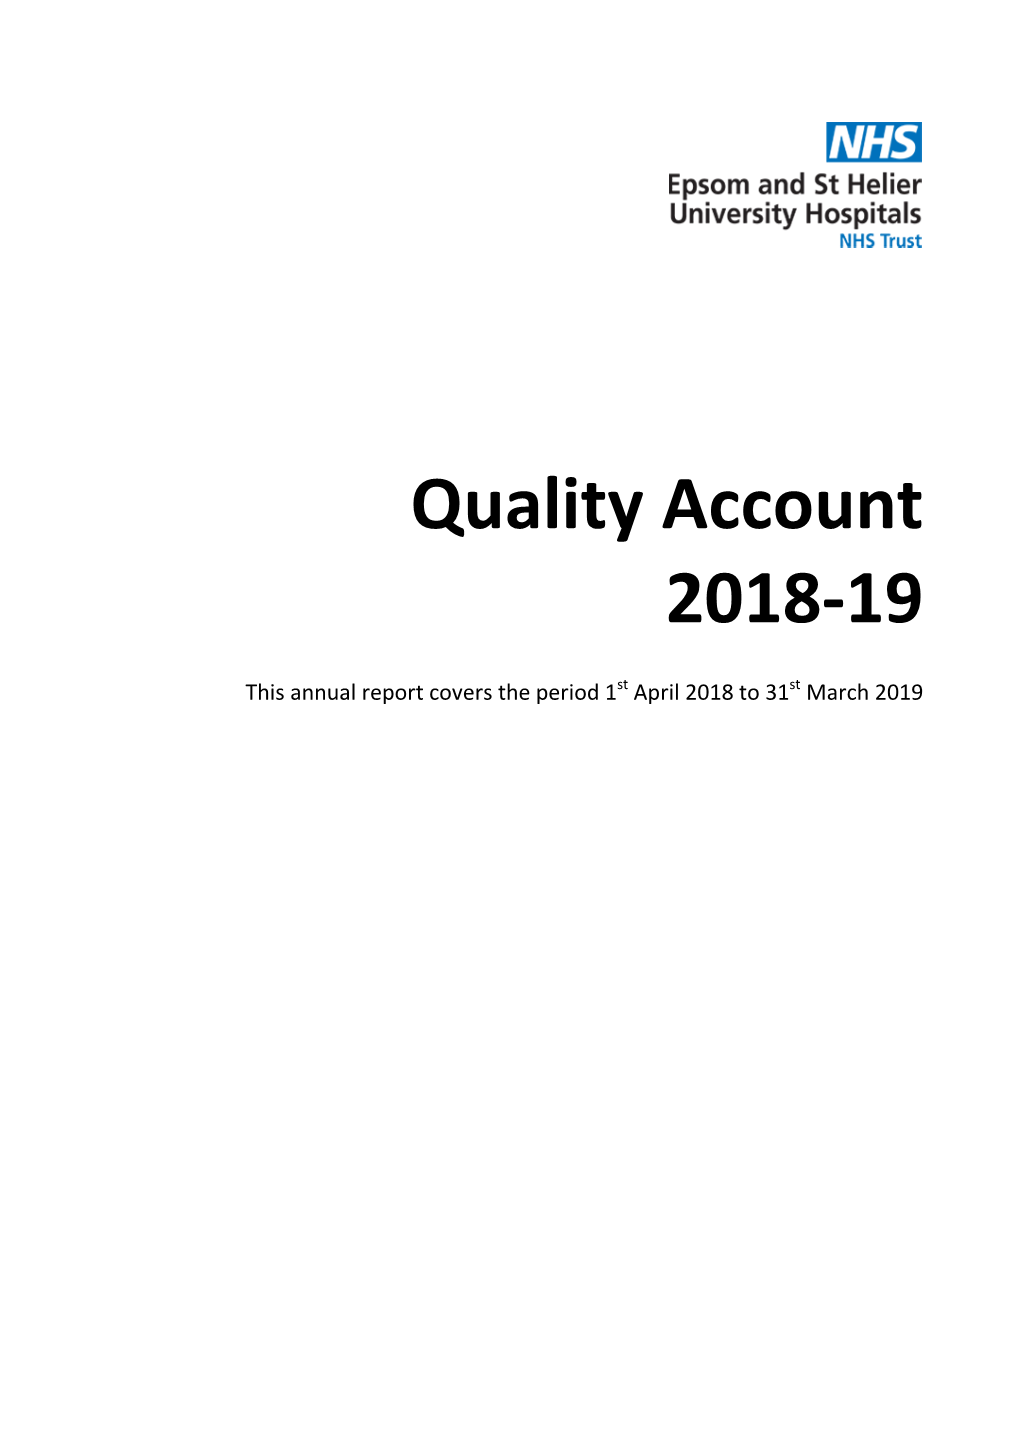 Quality Account 2018-19